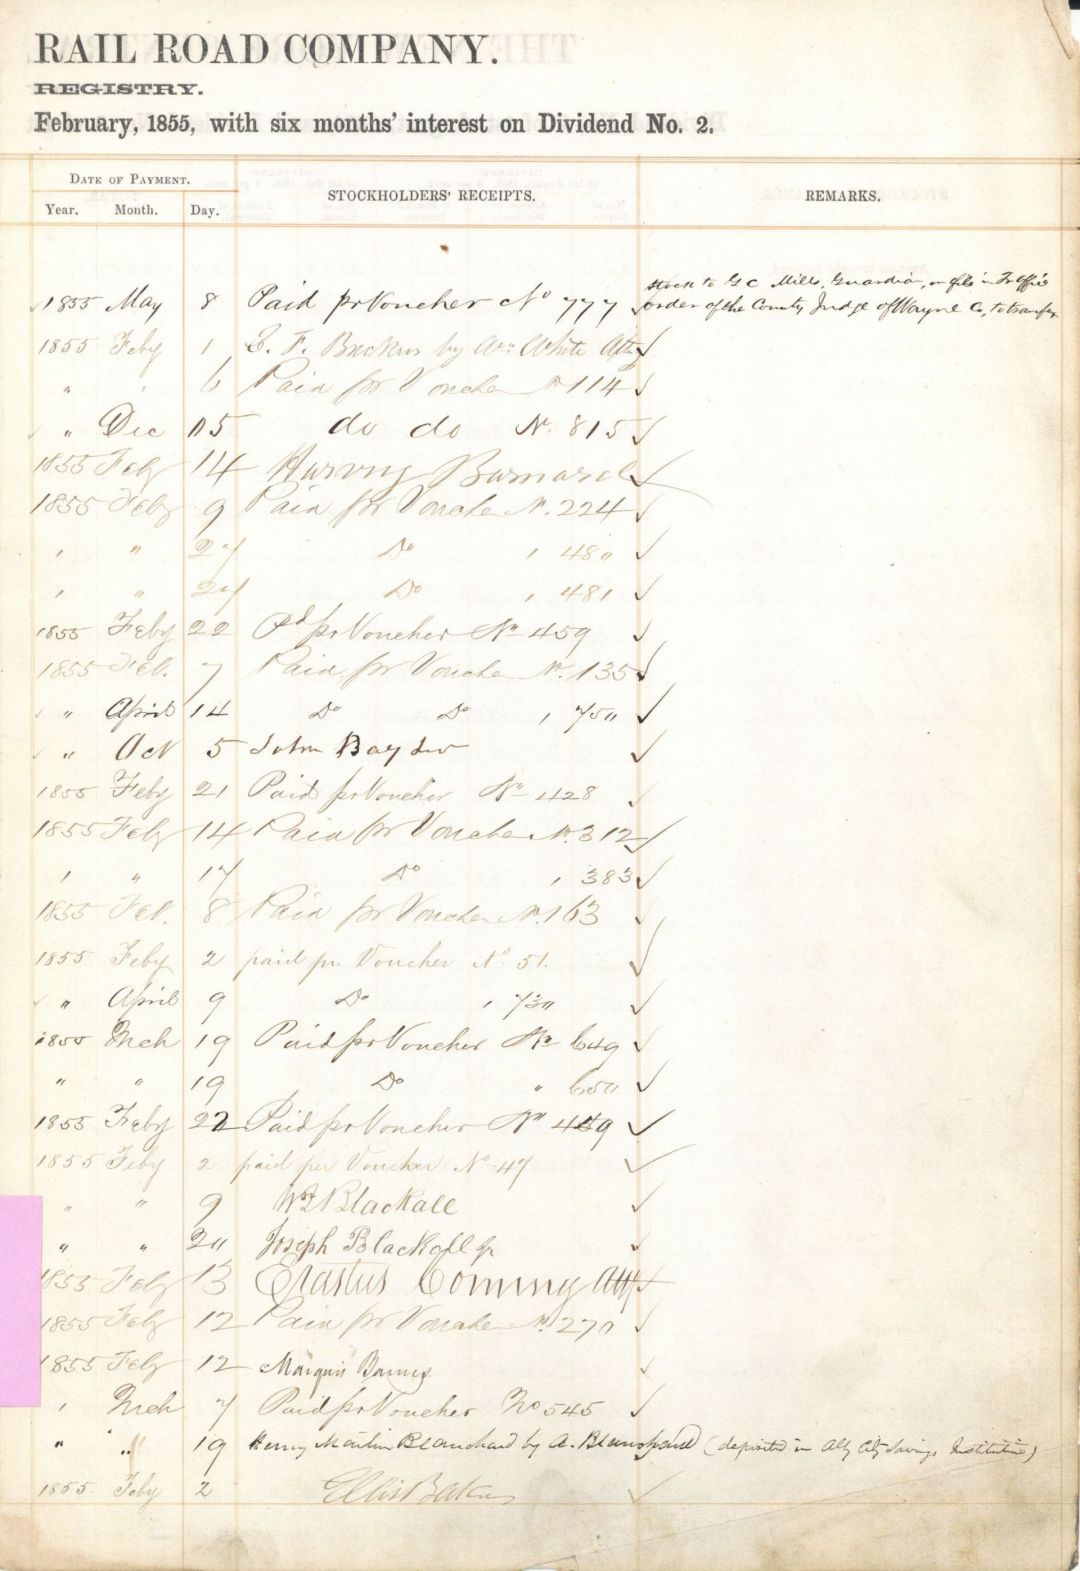 New York Central Railroad Ledger Sheet signed by Erastus Corning - Autographed Stocks and Bonds